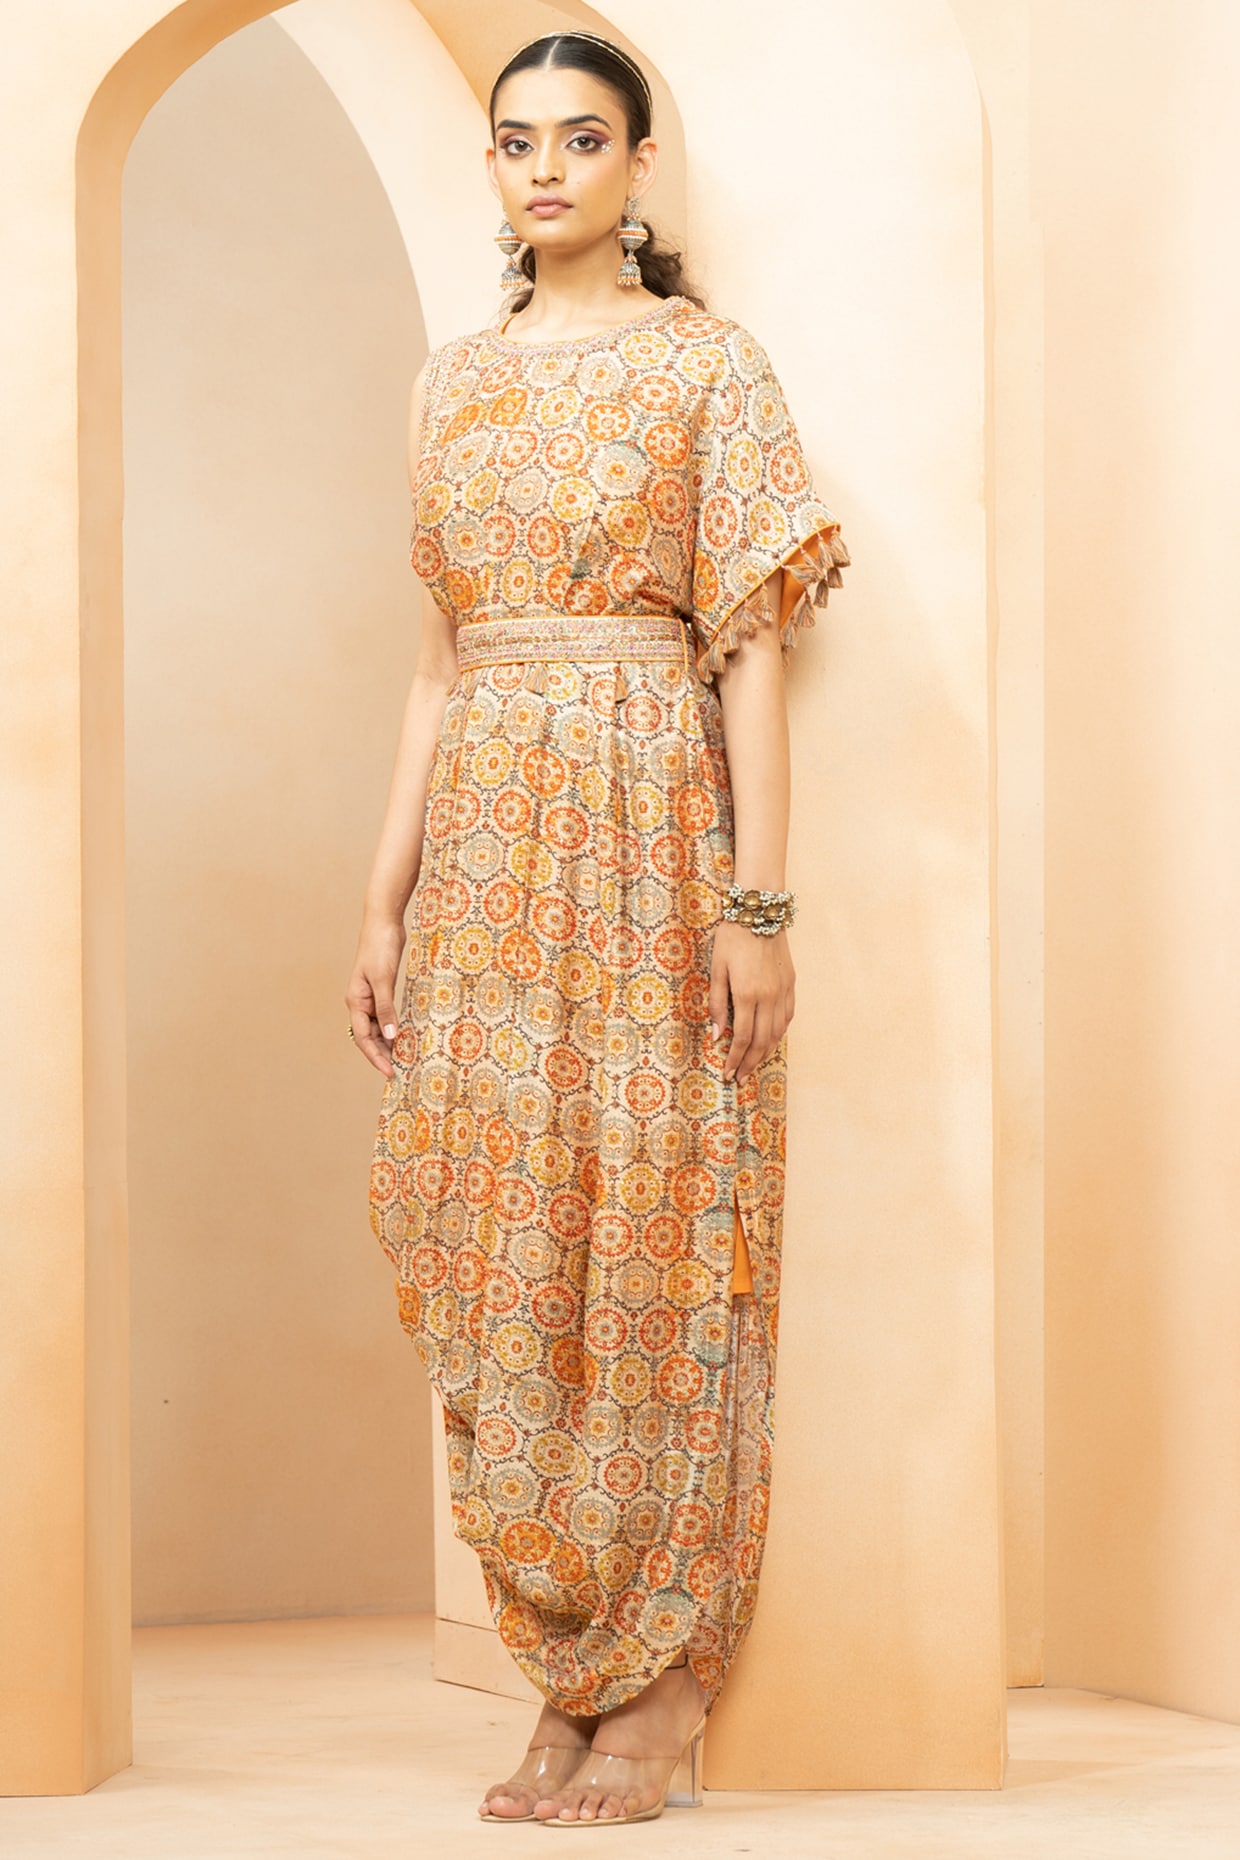 Buy Digital Print Multi Colour Trendy Gown Online : 263492 - Gown